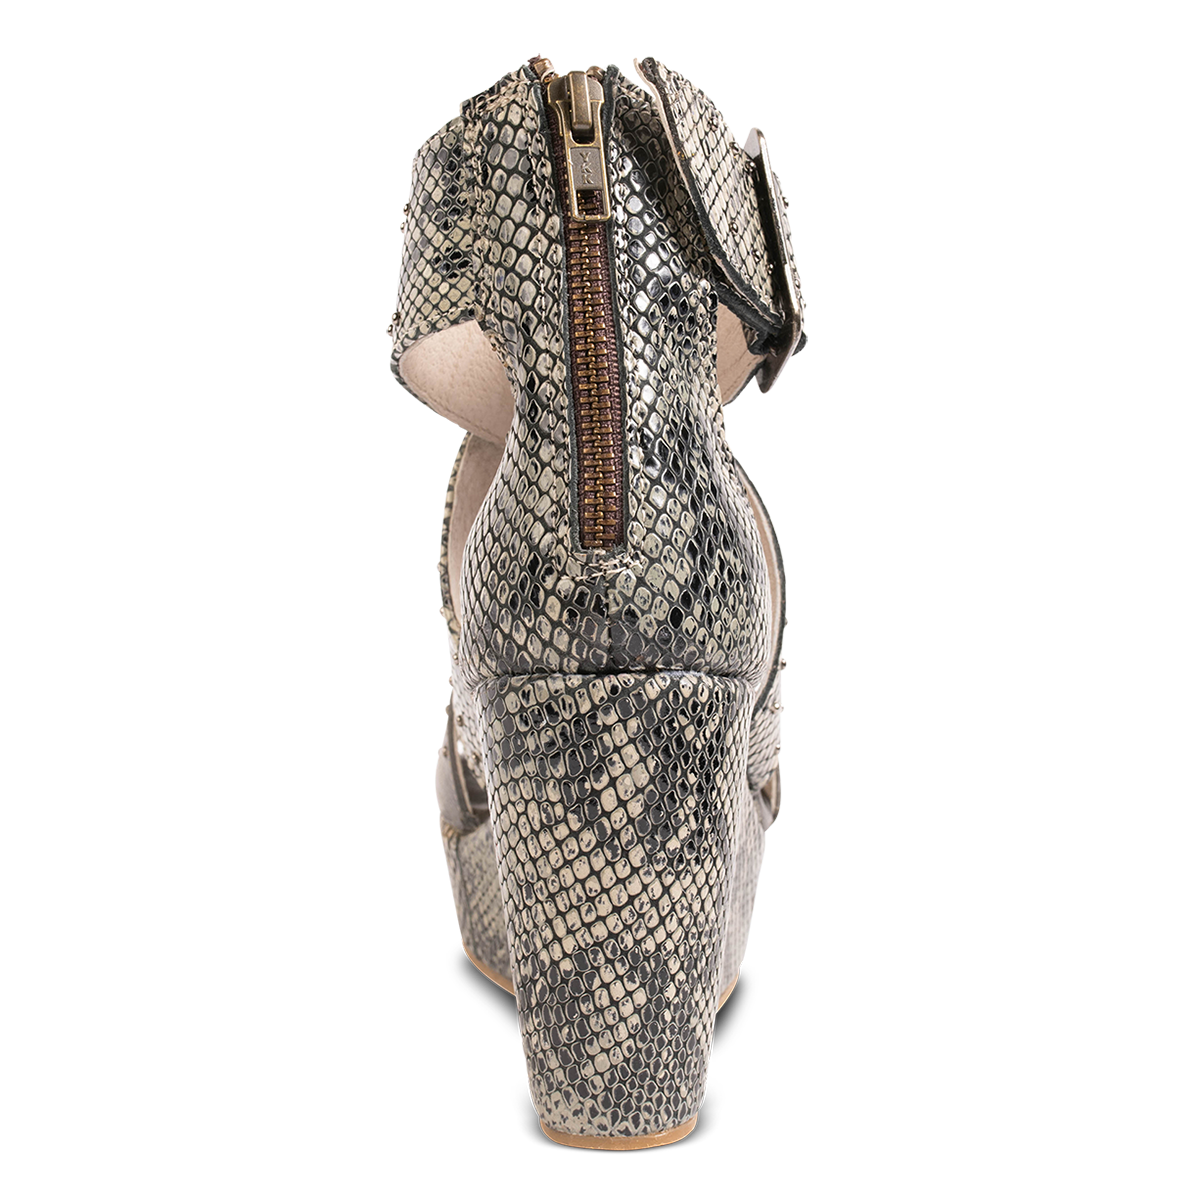 Back view showing wedge heel and zipper closure on FREEBIRD women's Terra olive snake multi platform sandal with stud detailing